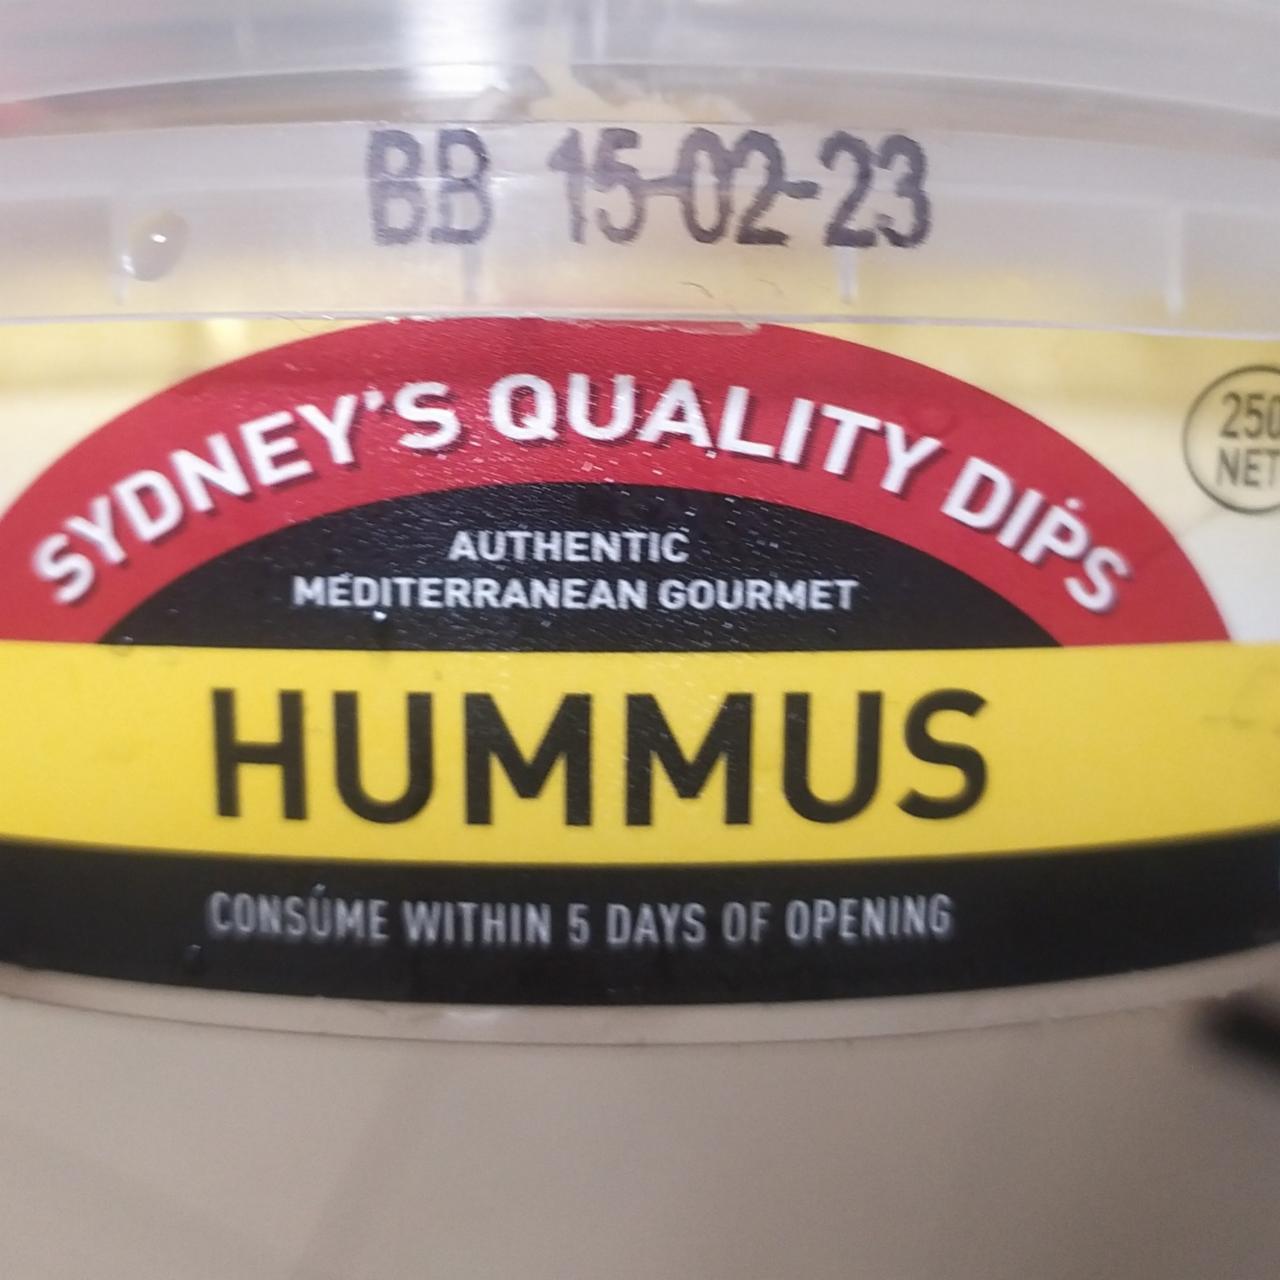 Fotografie - Sydney's Quality dips Hummus